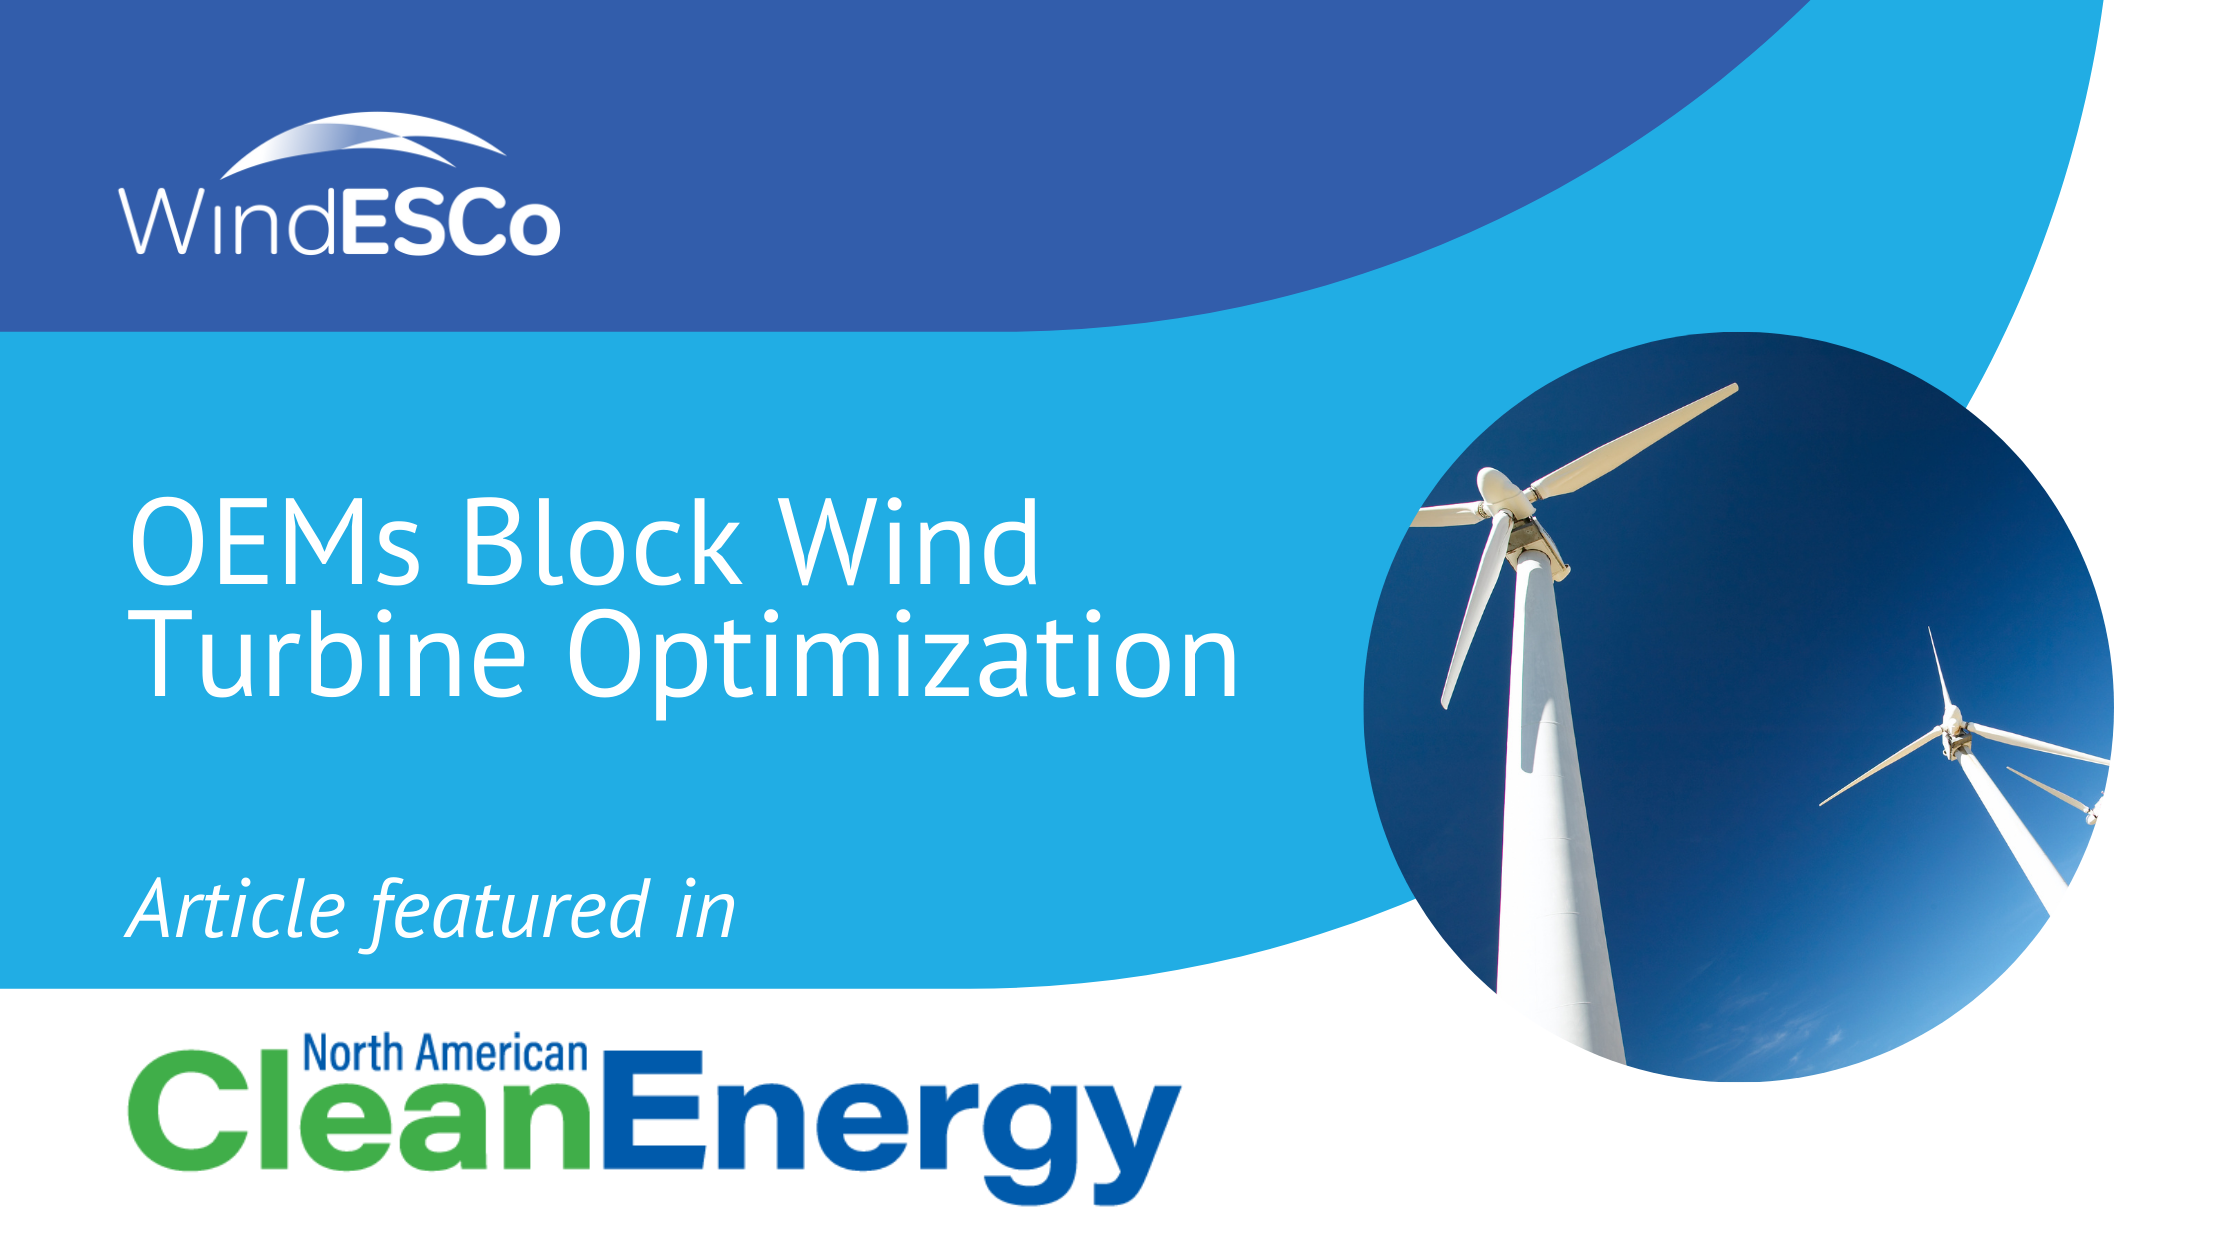 OEMs Block Wind Turbine Optimization, Featured in North American Clean Energy